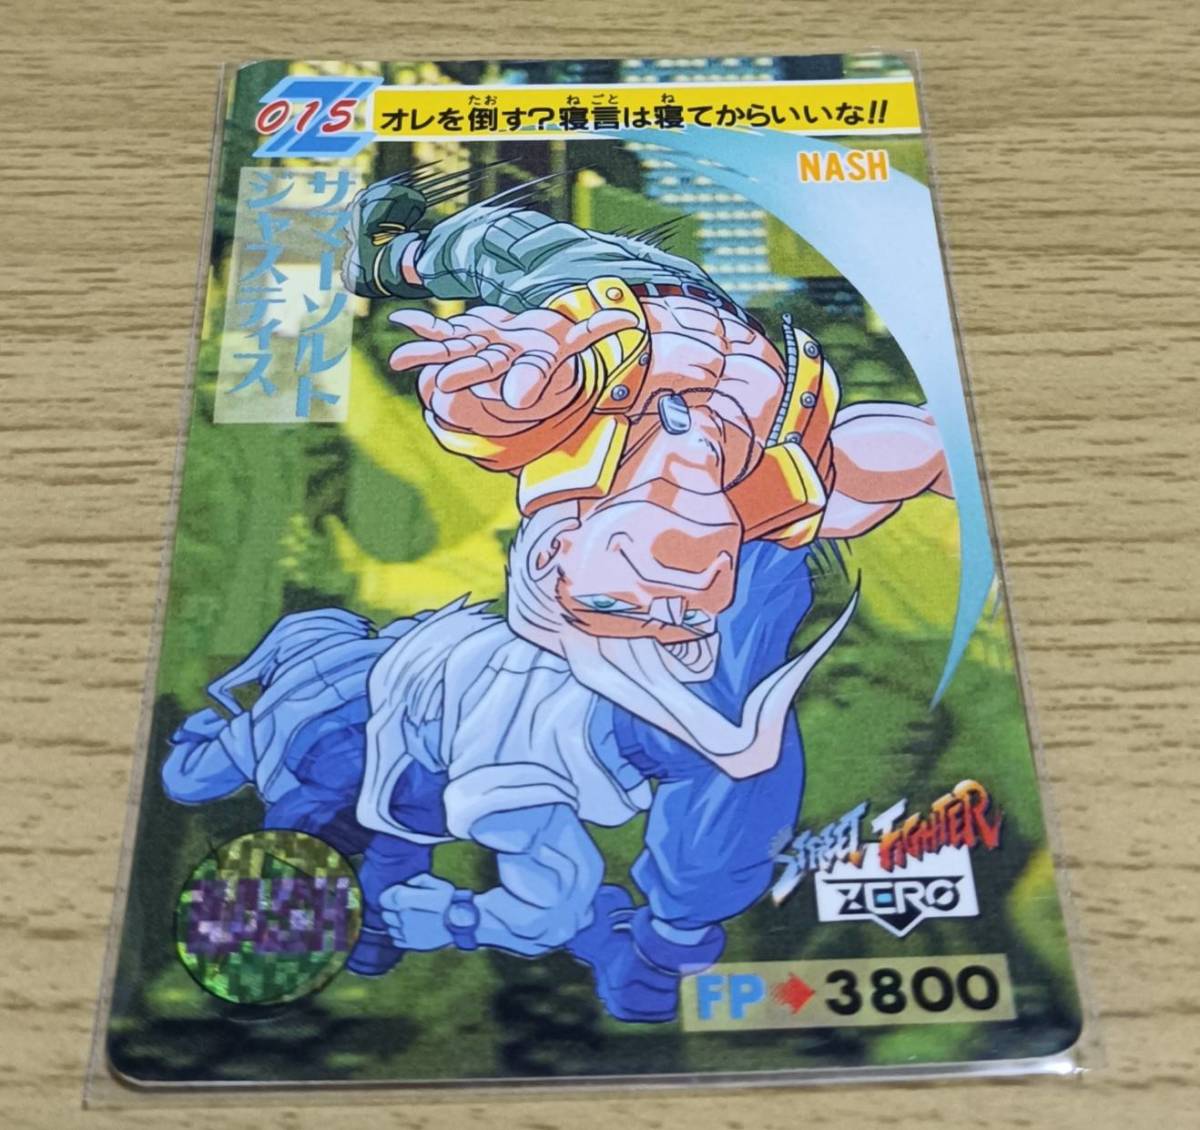  Bandai Street Fighter ZERO Carddas NASHnashu